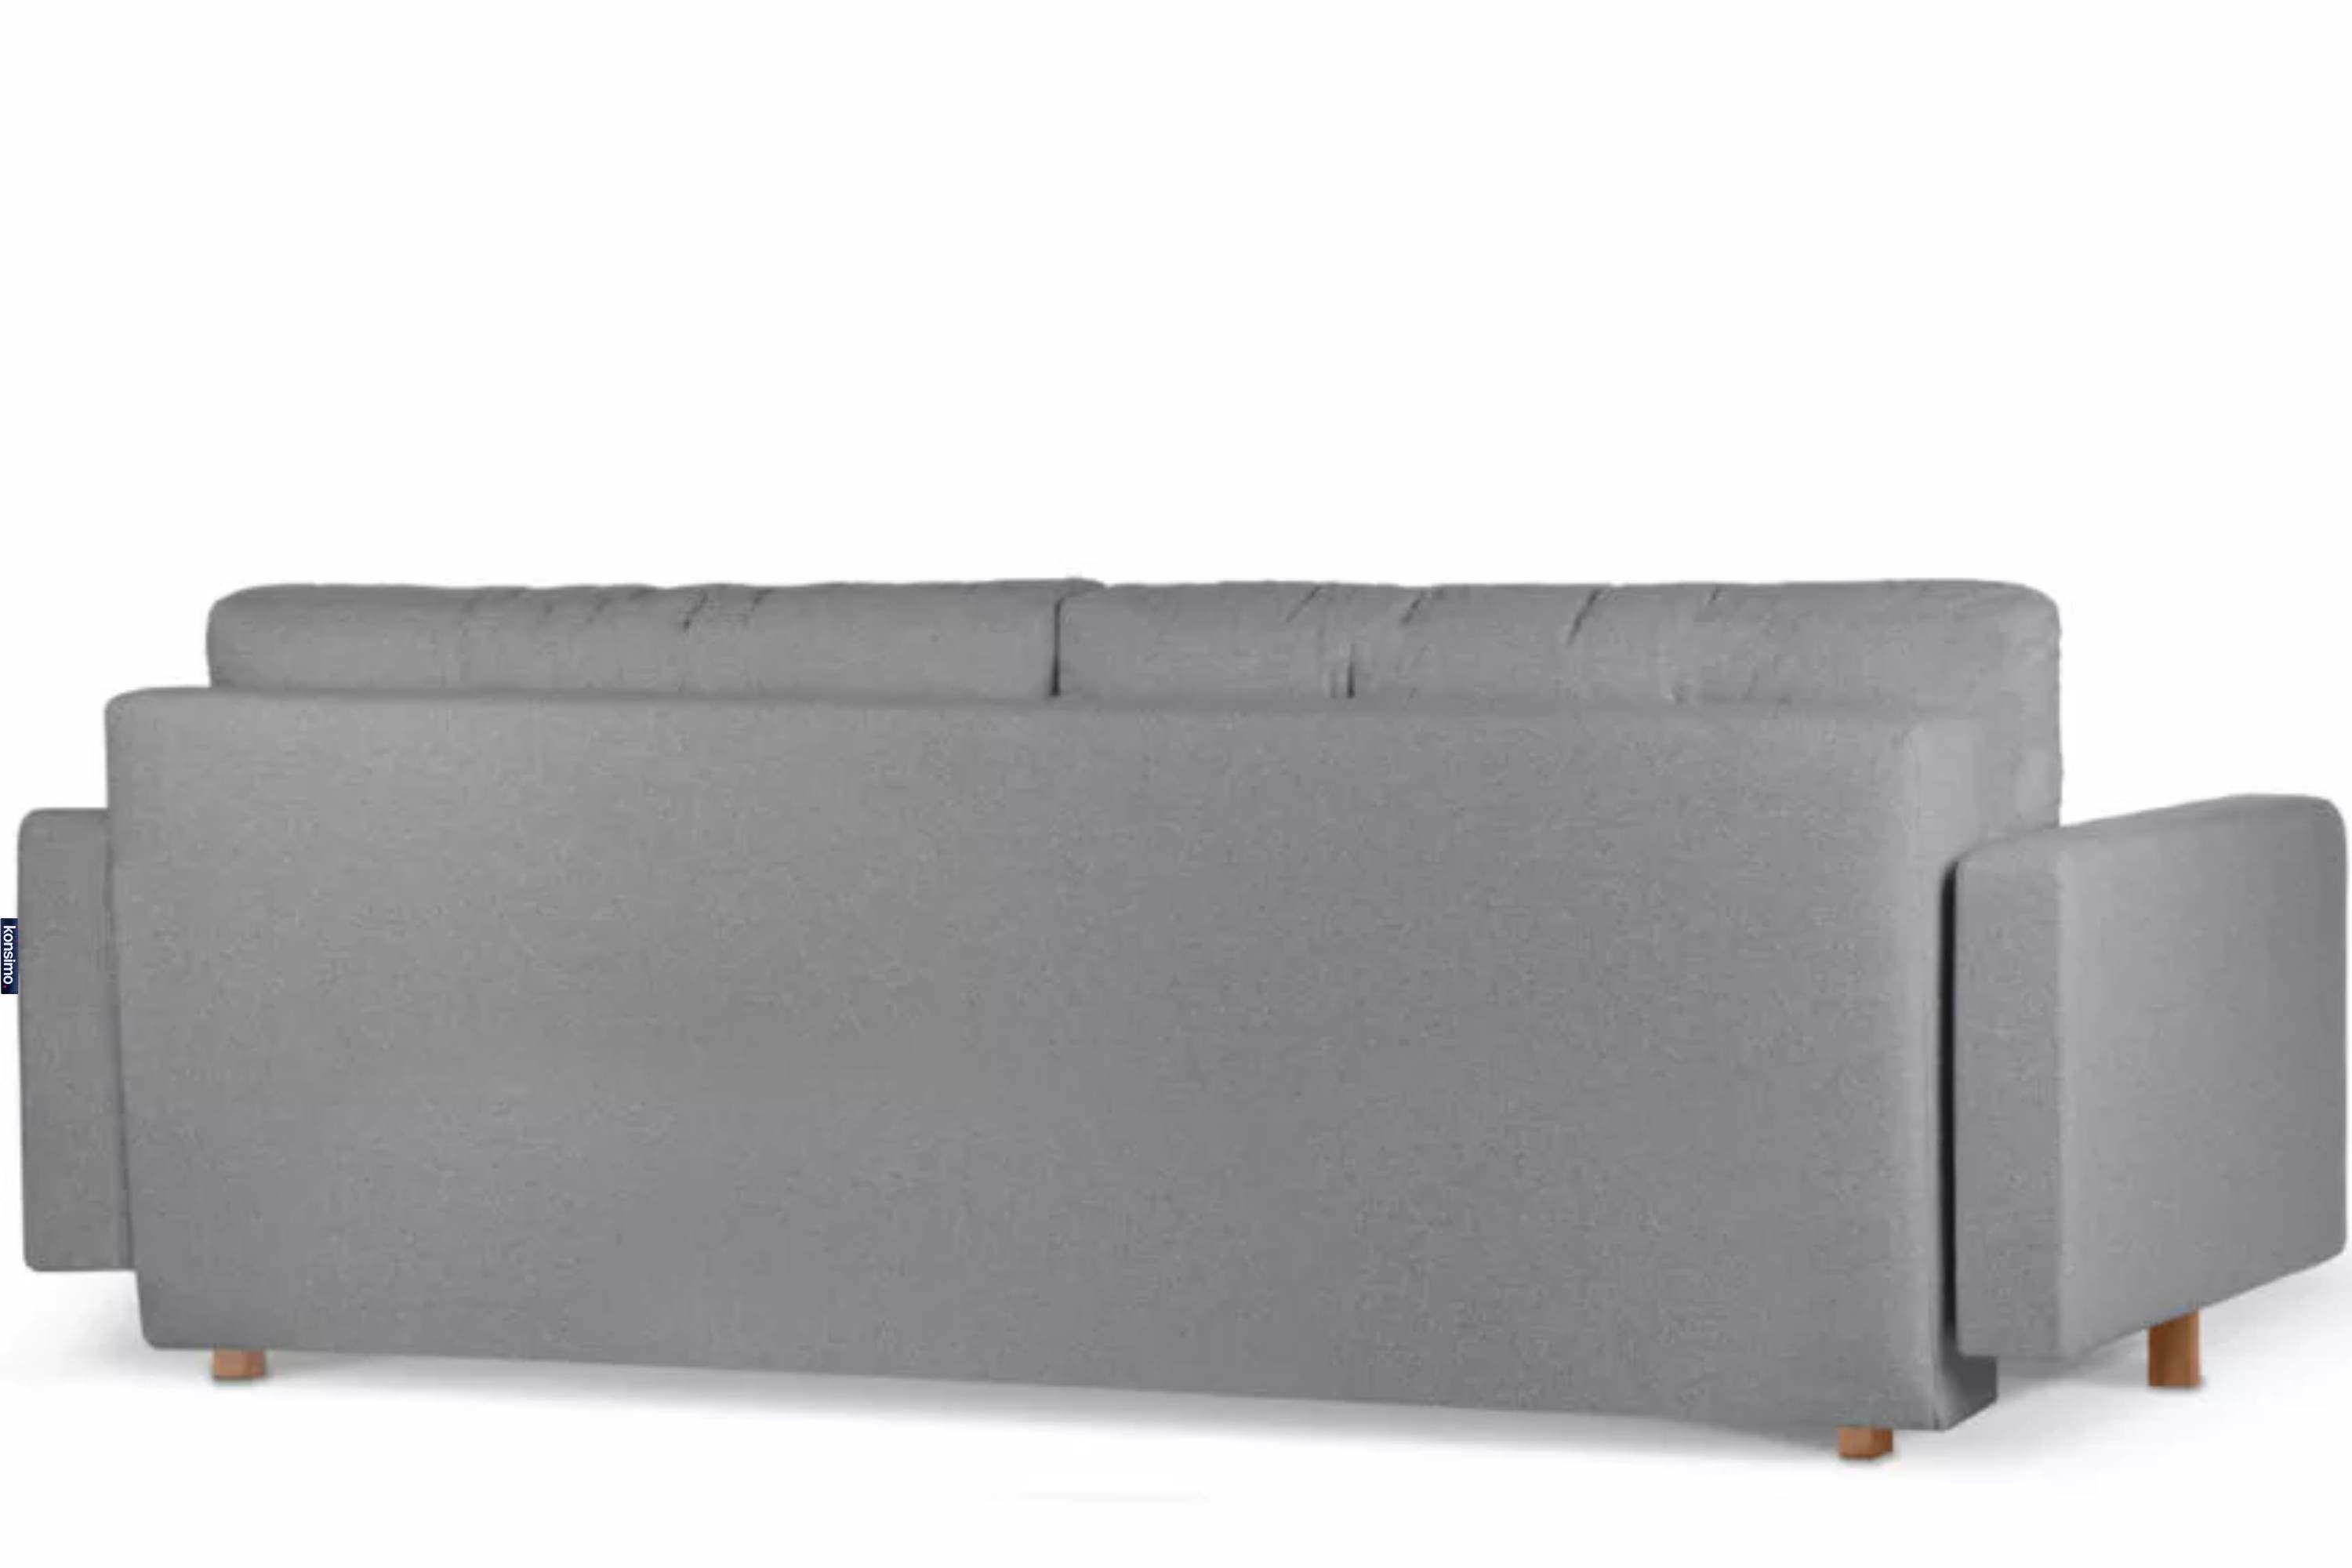 ERISO 3-Personen, Konsimo Sofa ausziehbare 196x150 cm Liegfläche Schlafsofa